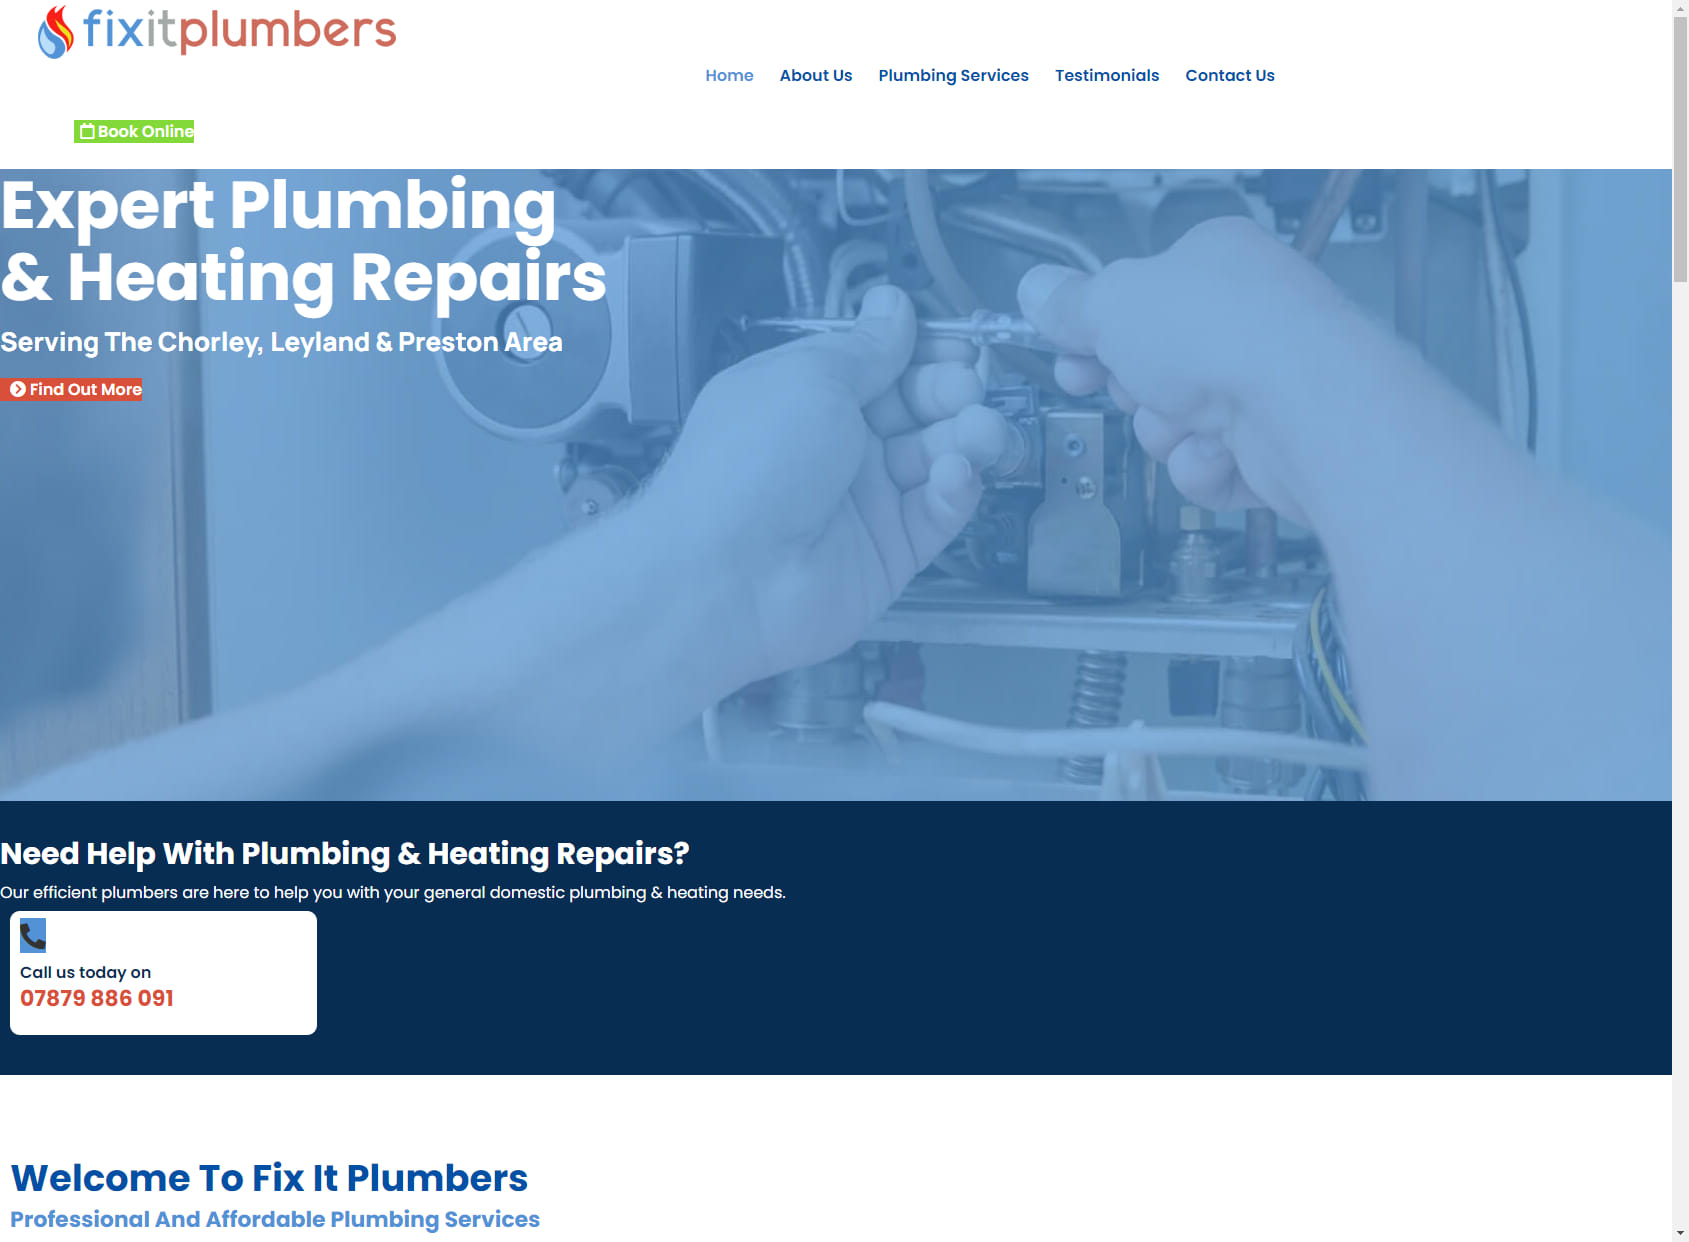 Fixitplumbers